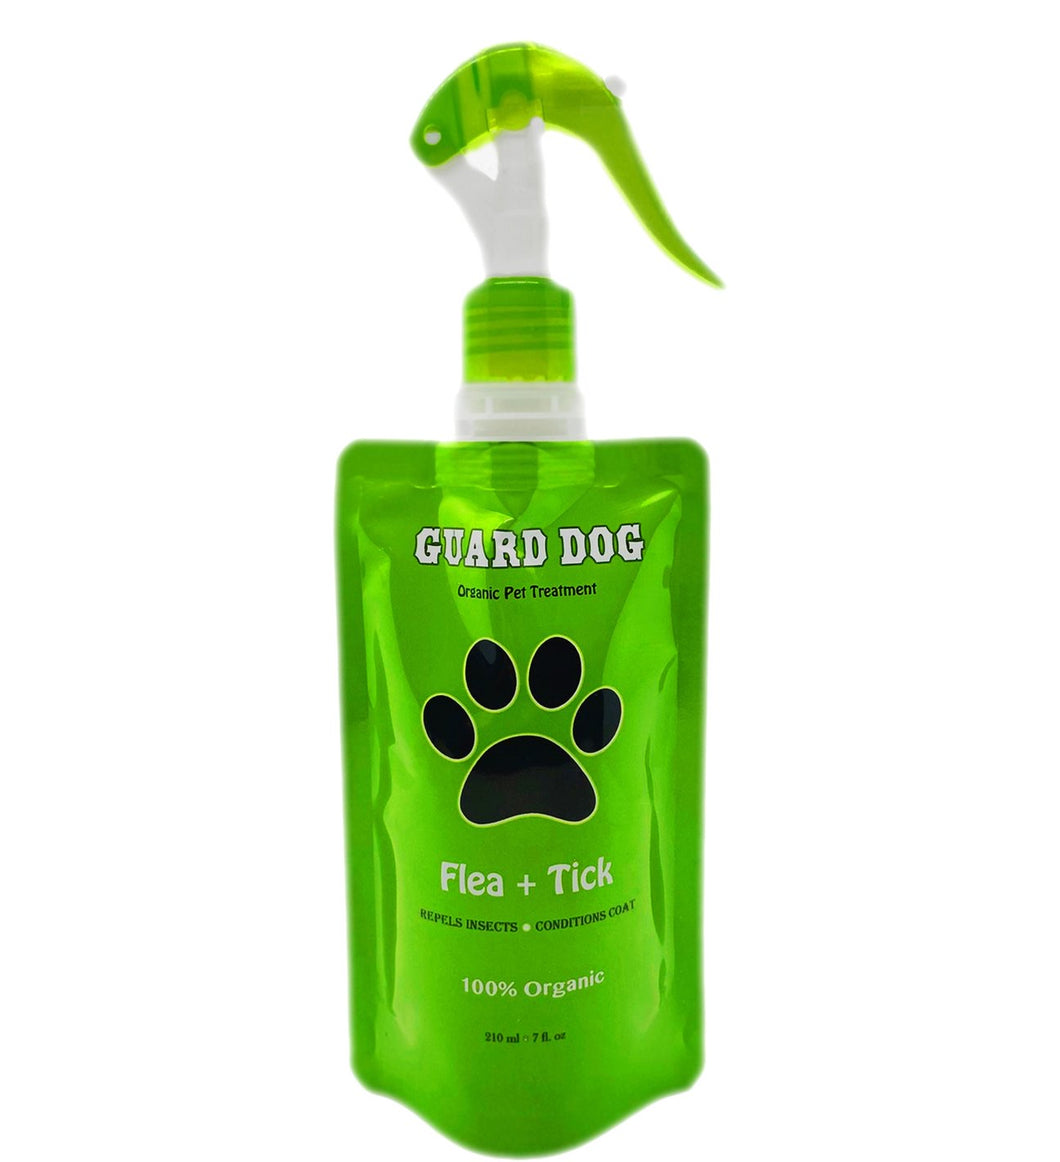 Guard Dog Flea + Tick